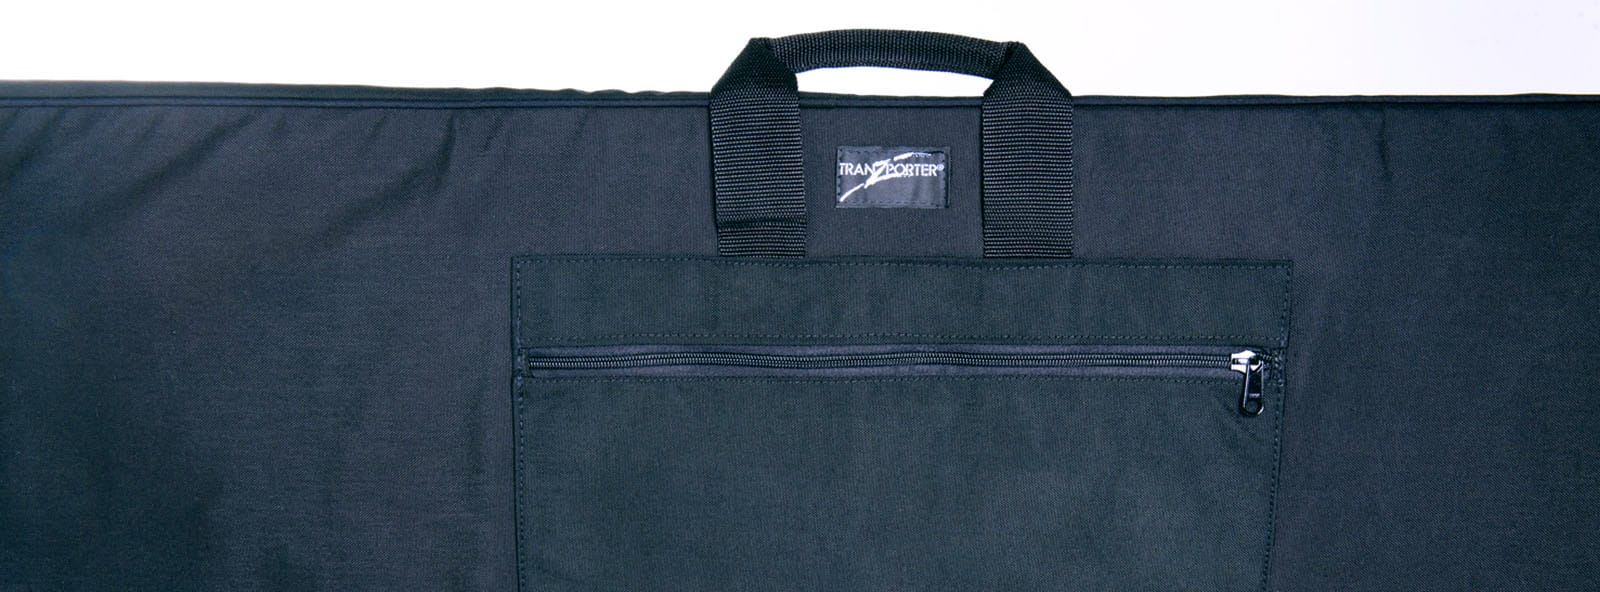  Large Size Art Portfolio Bag with Nylon Shoulder, 24 x